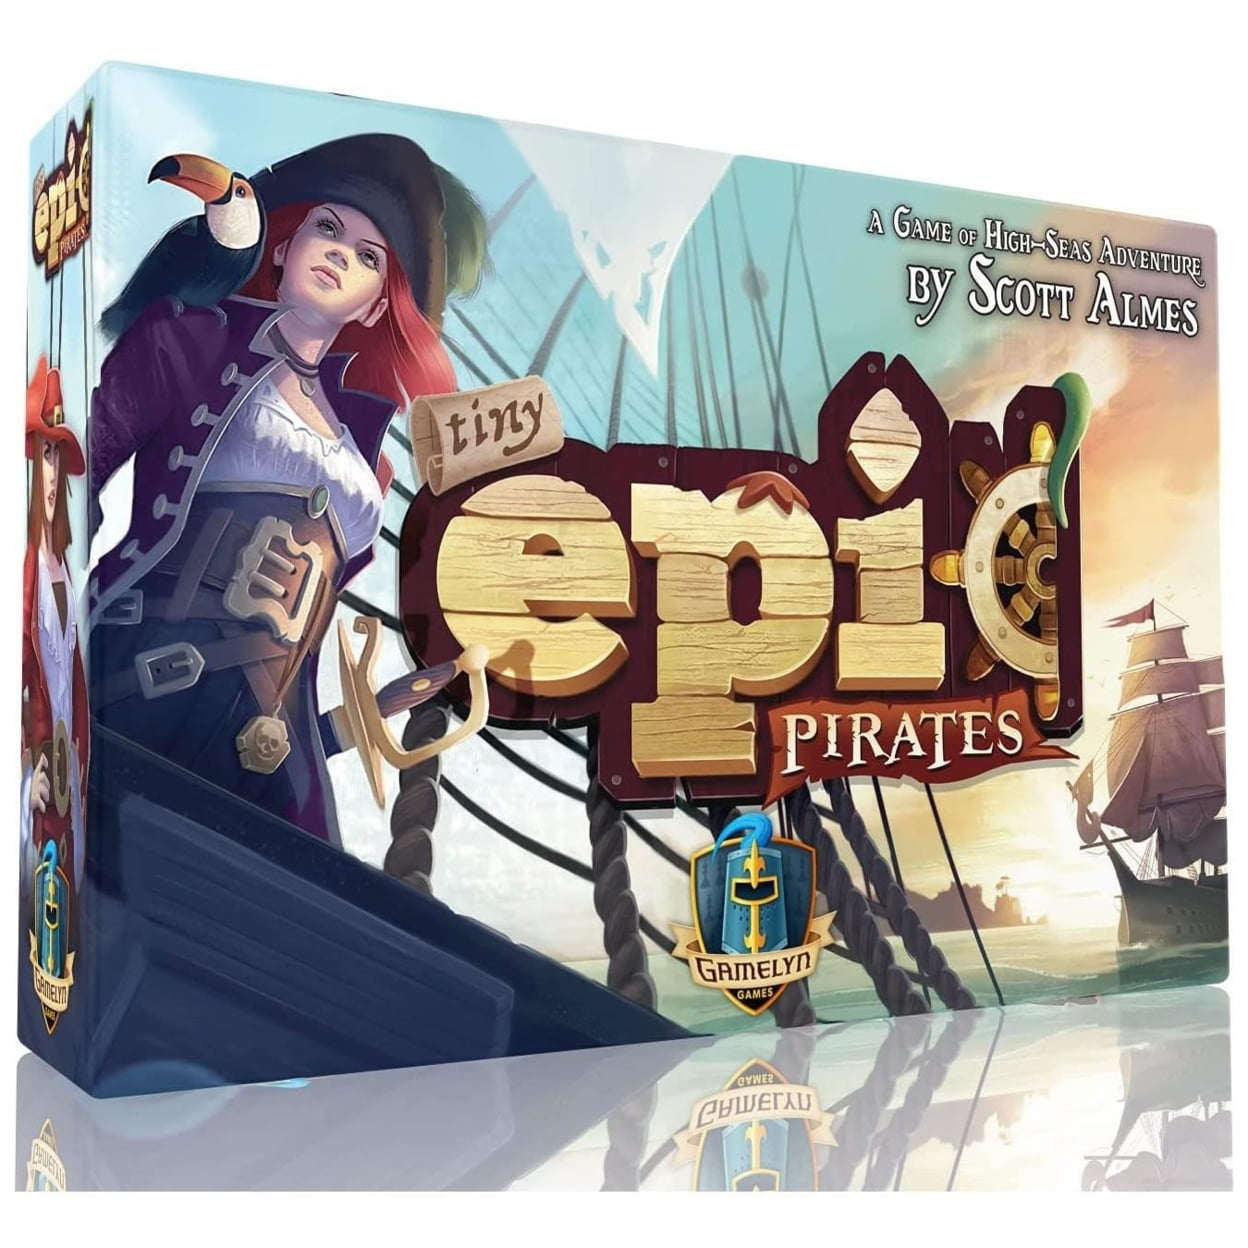 Epic Card Game, Board Game